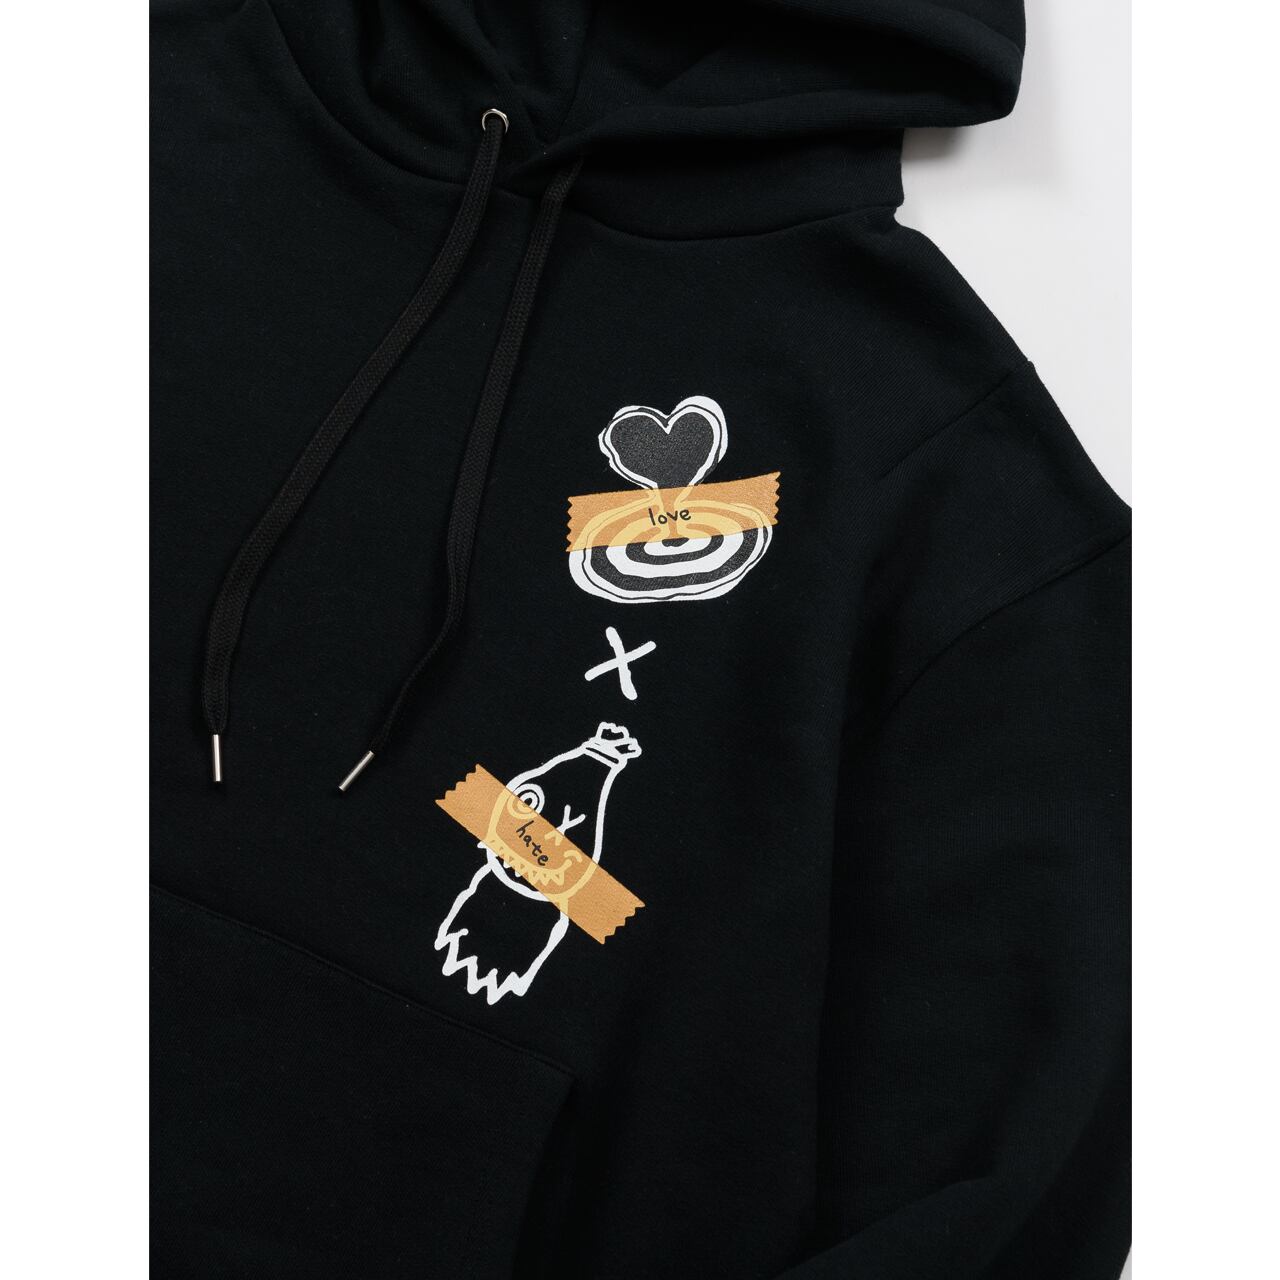 [LKCS] seo_cccc X LUCKYCHARMS hoodie-BLACK 正規品 韓国ブランド 韓国ファッション 韓国代行 lucky  charms パーカー ソ・イングク bz20111405 | BONZ (韓国ブランド 代行) powered by BASE